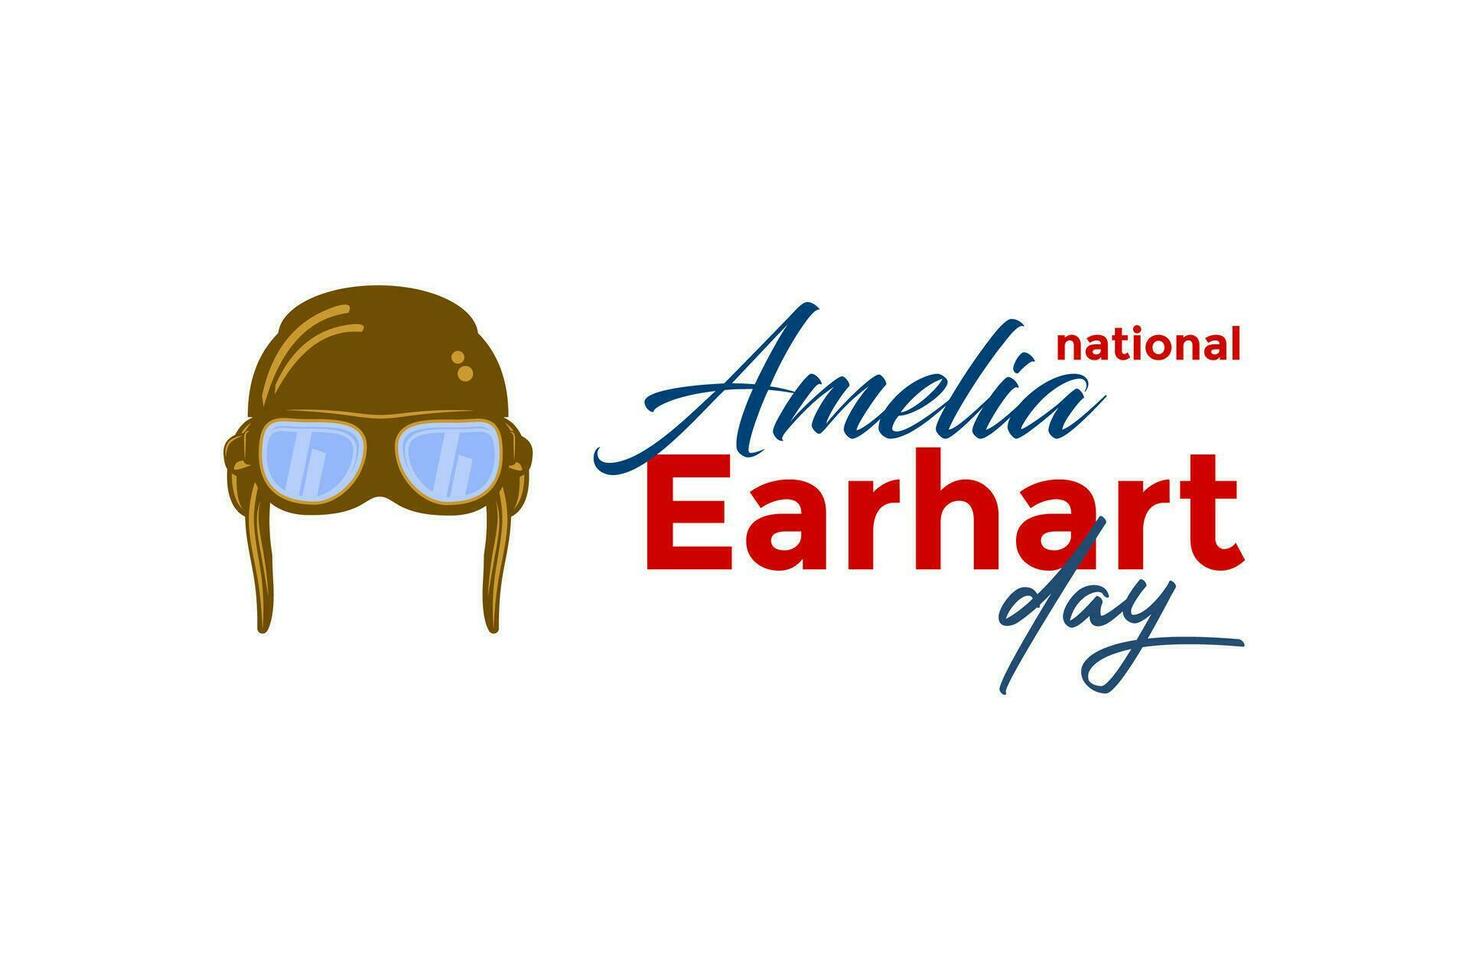 nationell amelia earhart dag vektor